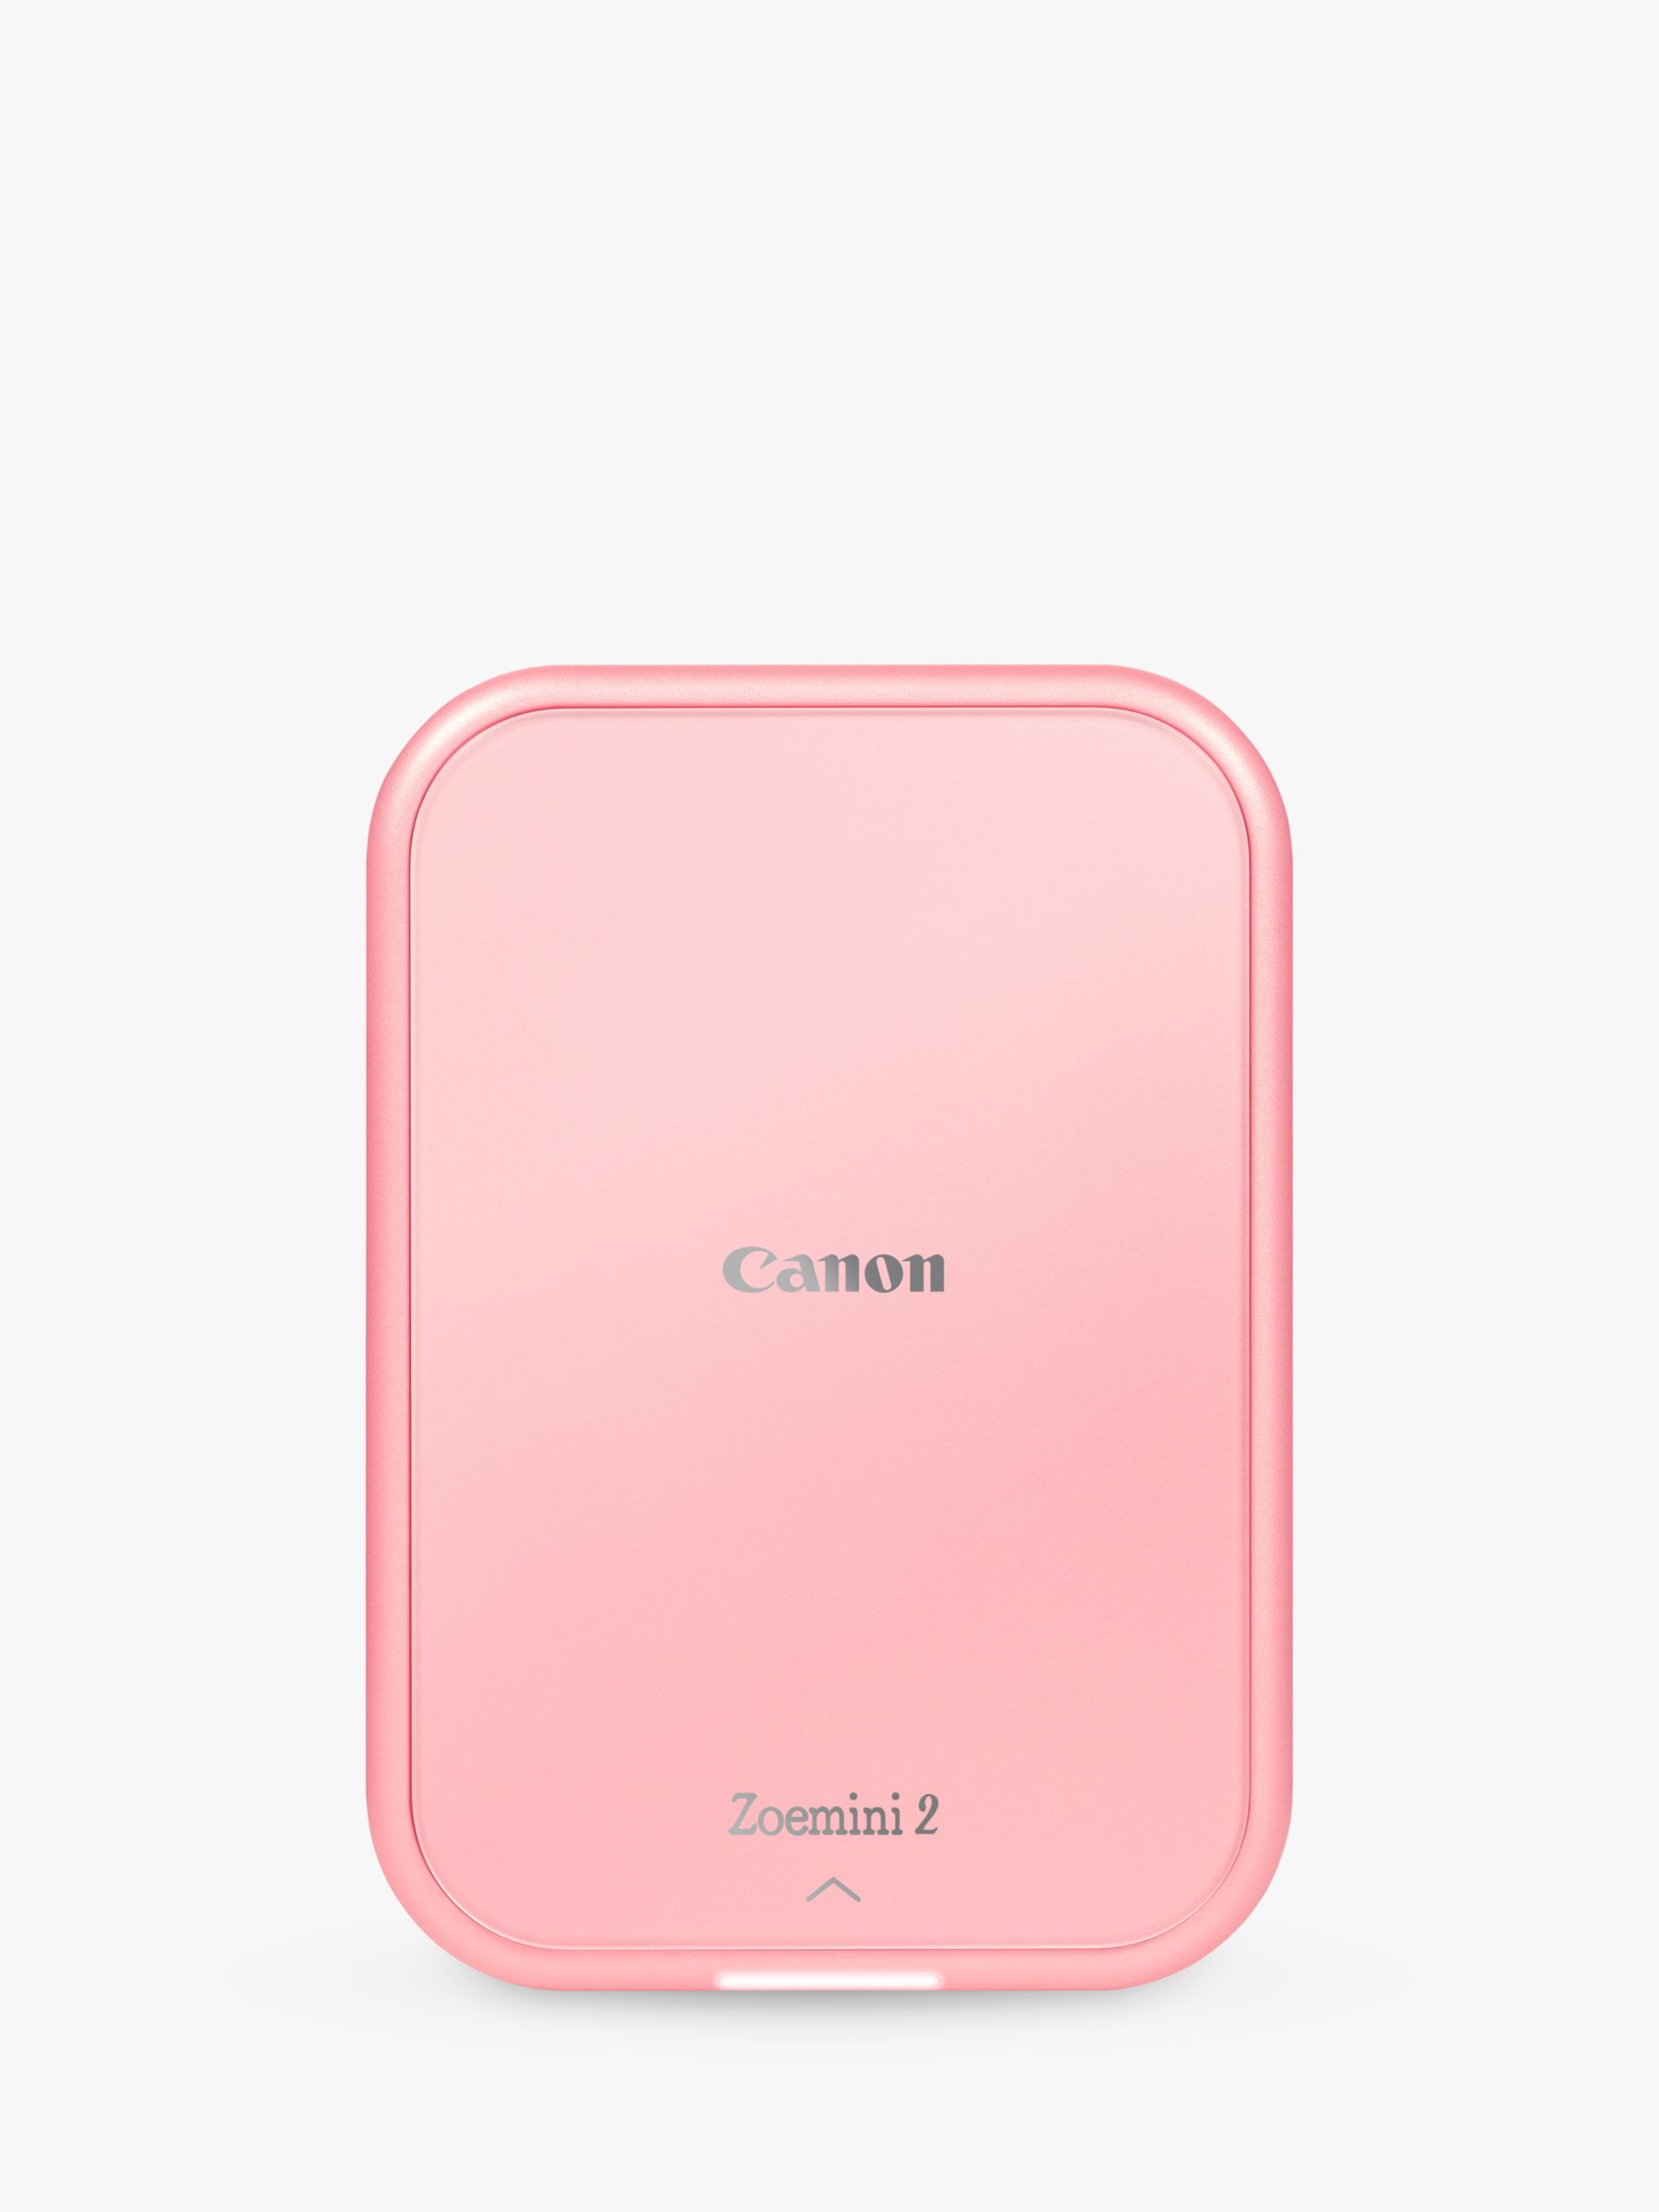 Canon Zoemini S2 - 2in1 Mini Photo Printer Camera - 10 Prints Included -  Rose Gold @ Best Price Online